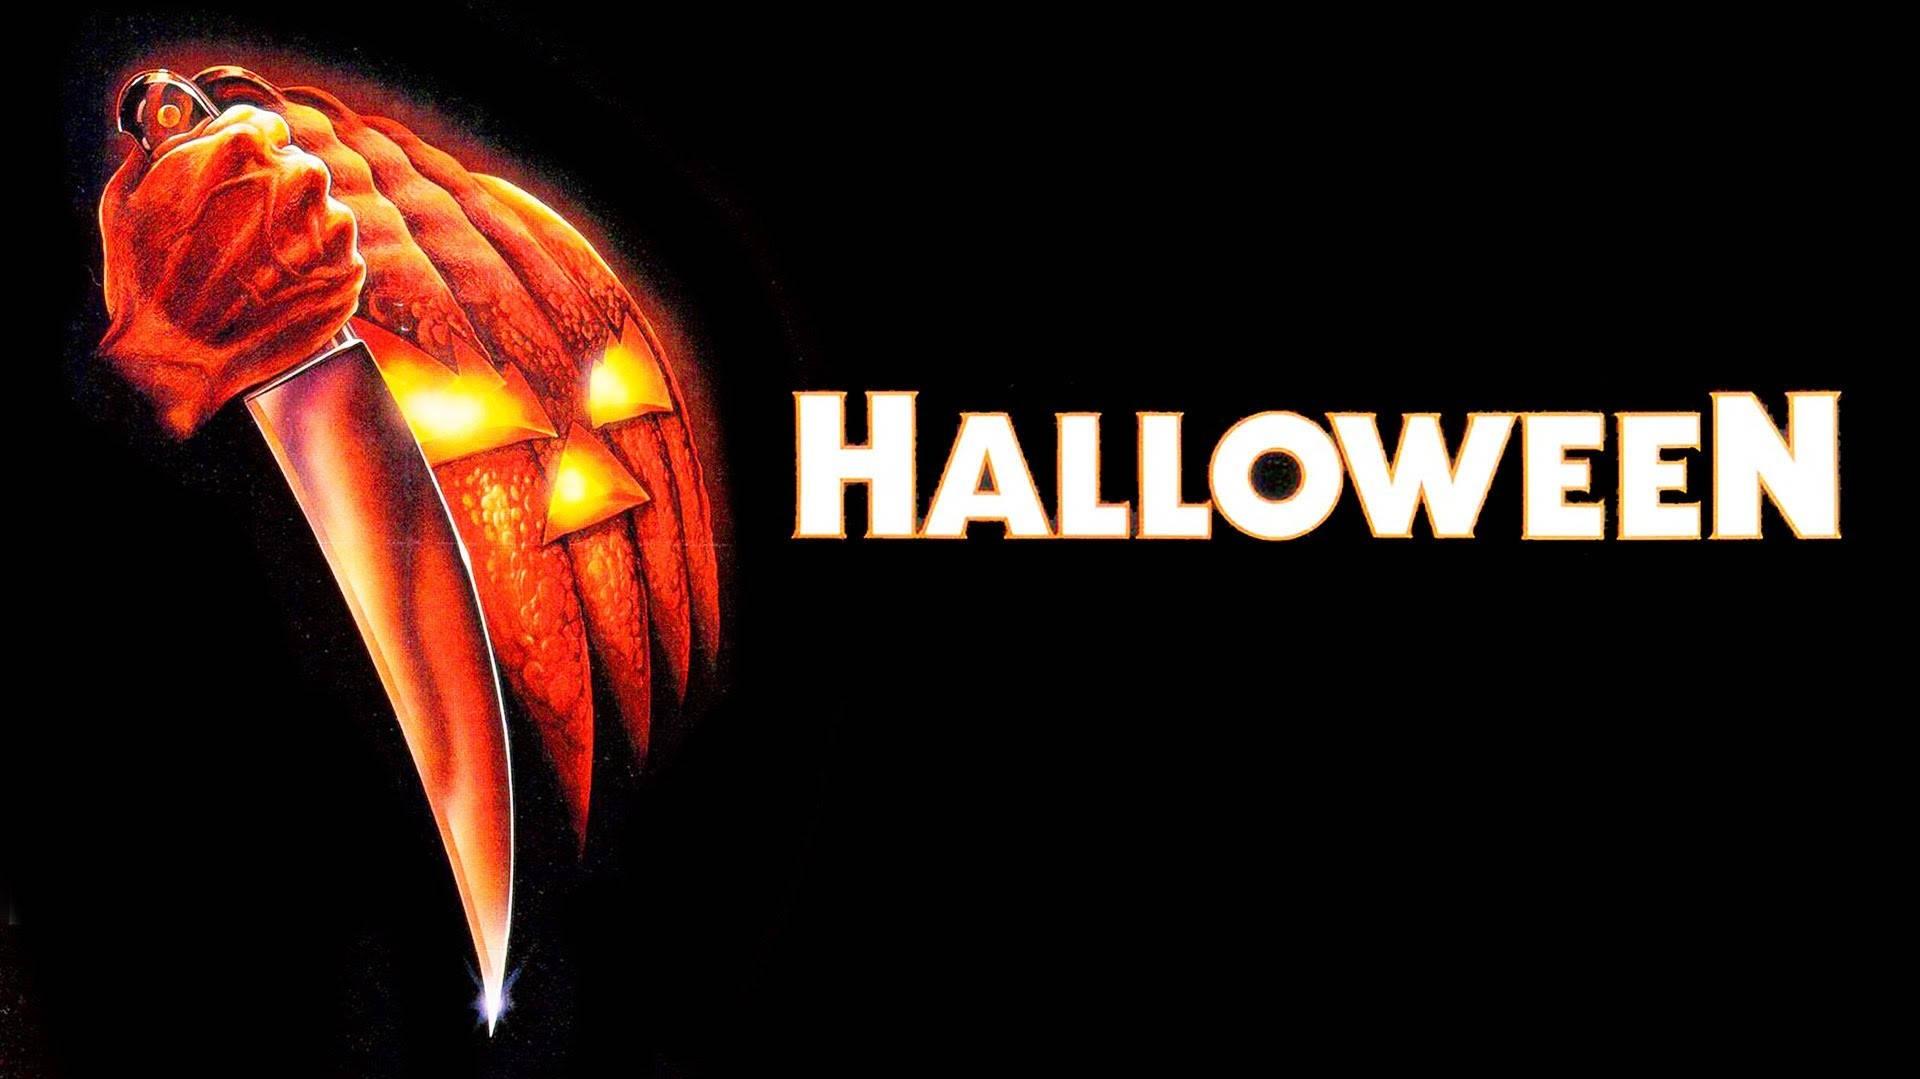 Classic Horror Movie Halloween Poster Wallpaper